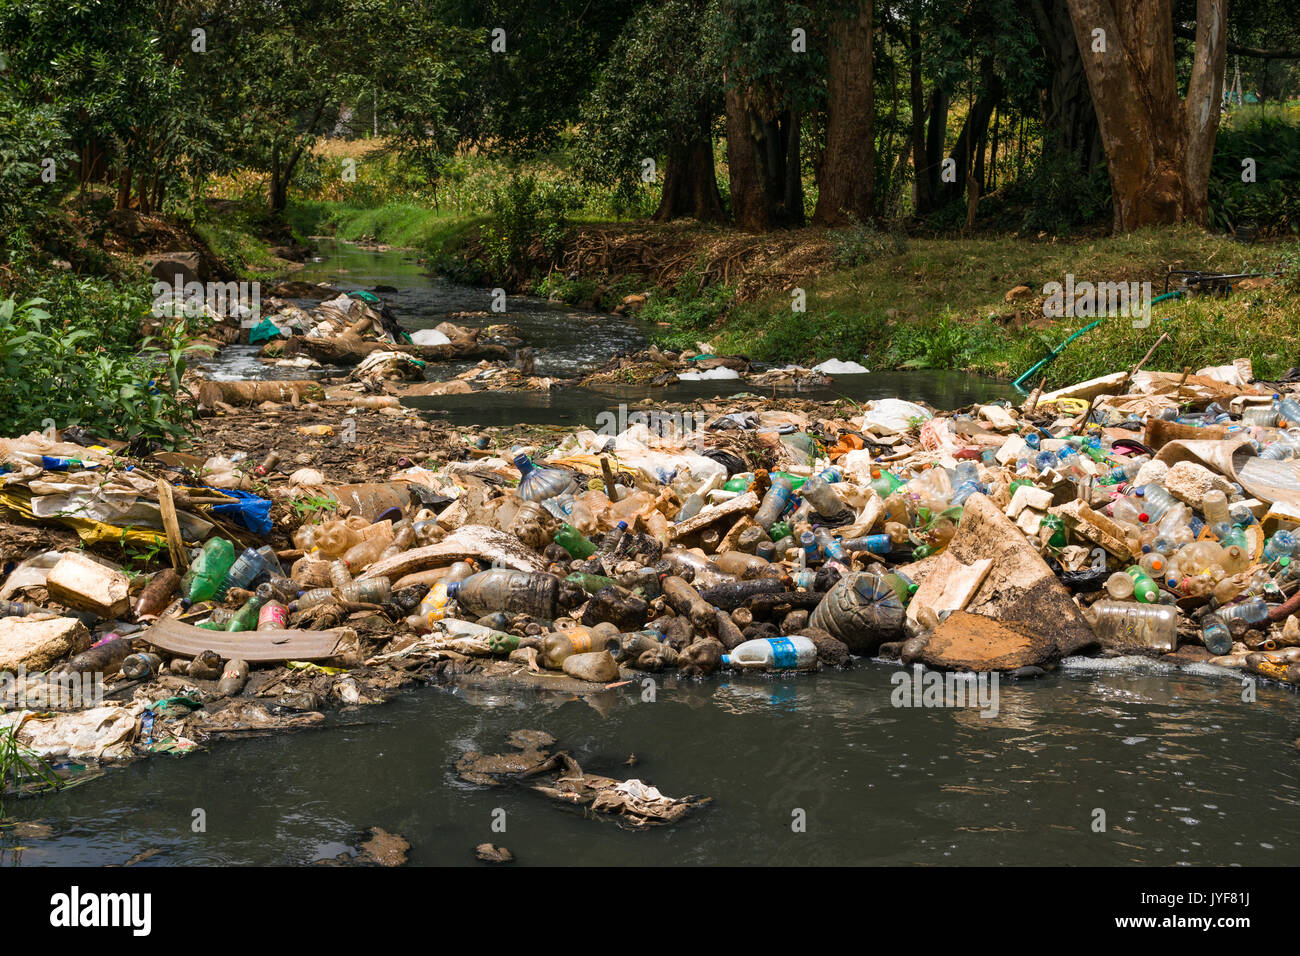 Plastic bottles and other waste rubbish blocking Nairobi river, Kenya Stock Photo